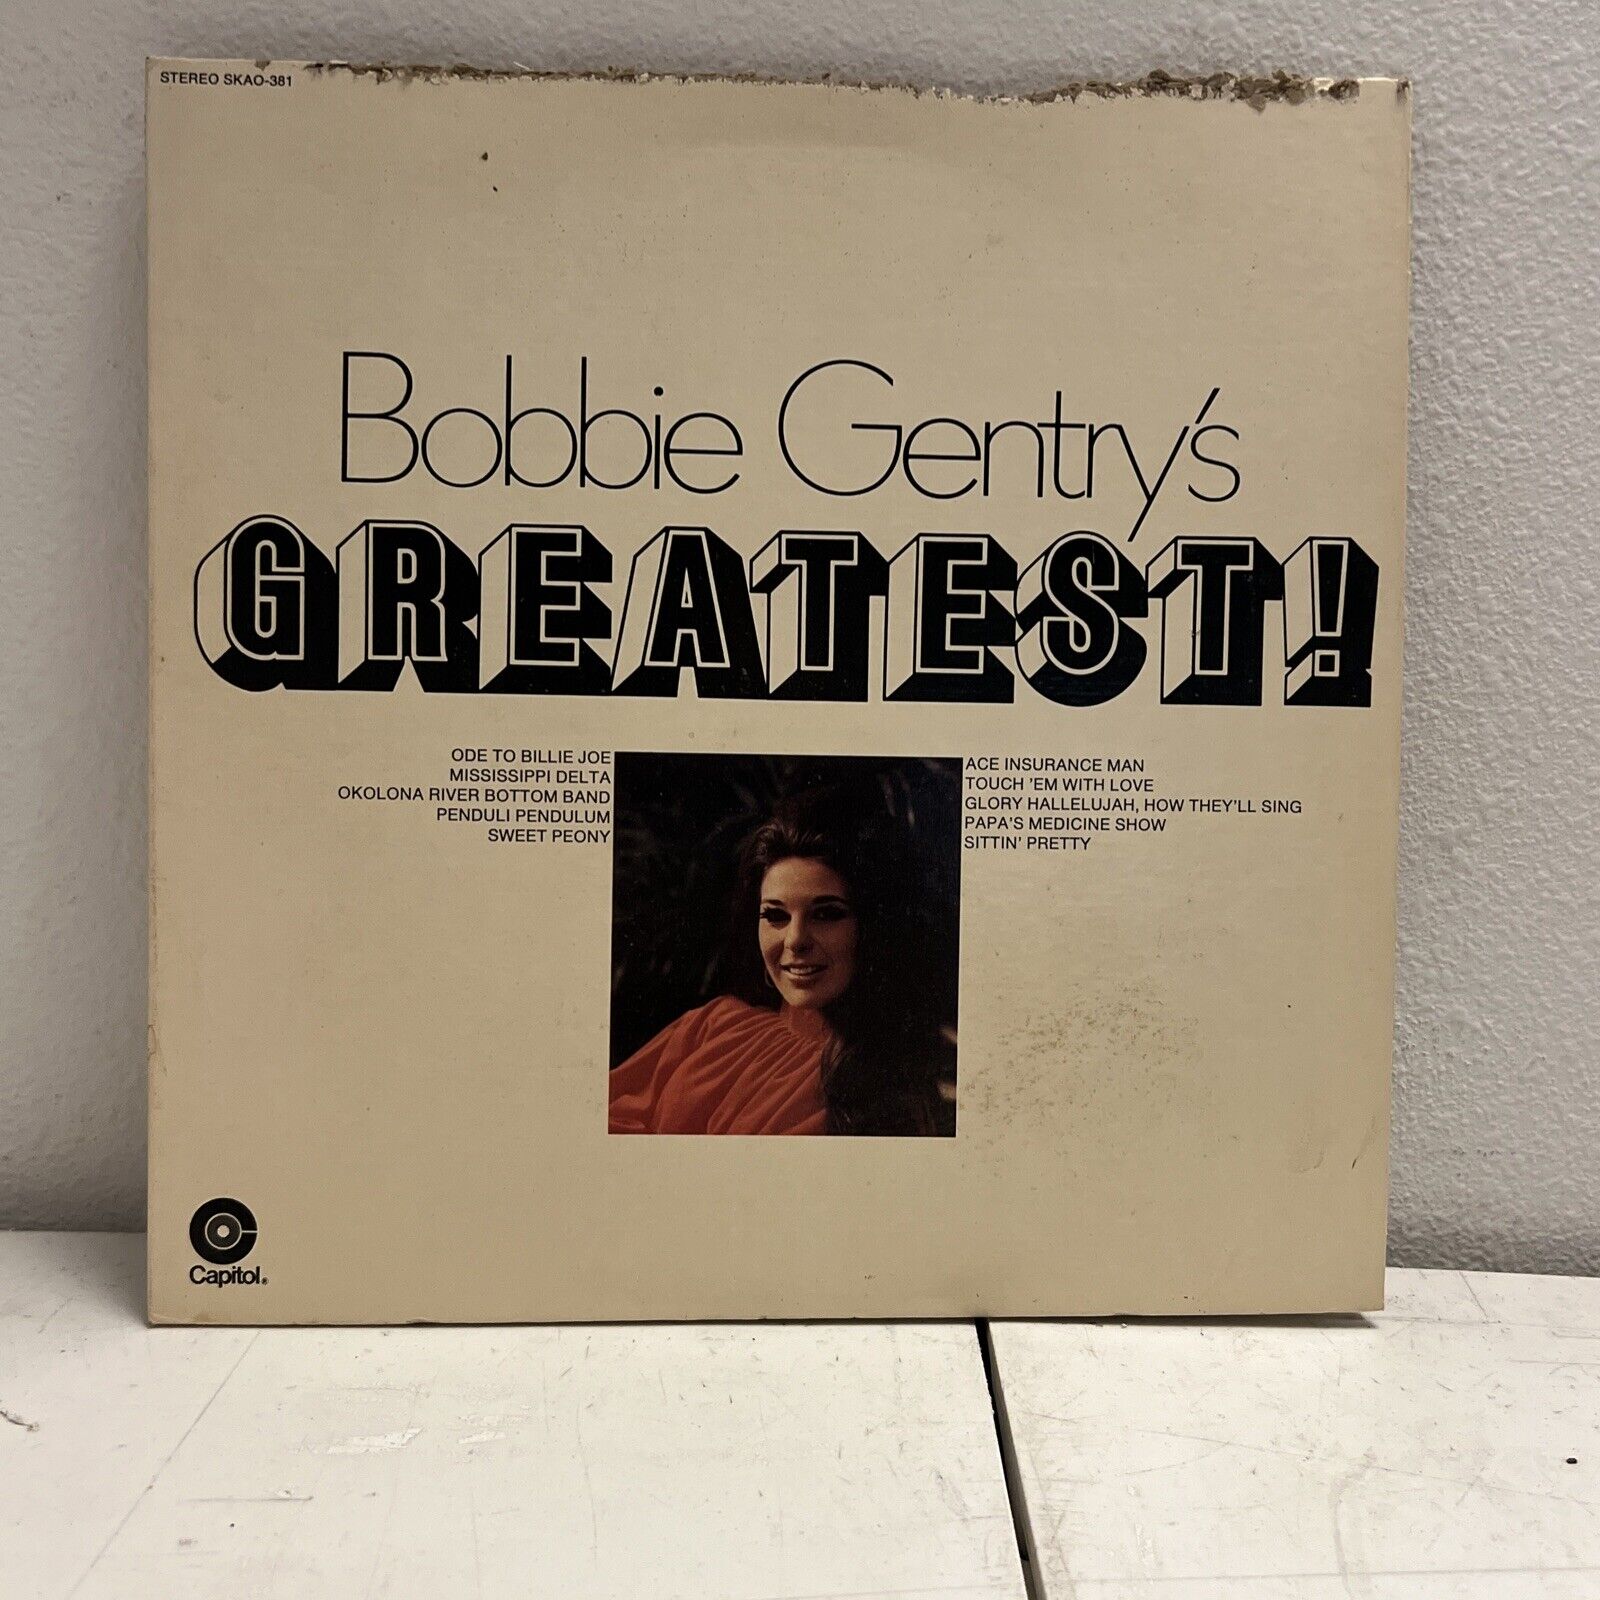 Bobbie Gentry ‎– Bobbie Gentry's Greatest Vinyl LP Album Stereo  ORIGINAL